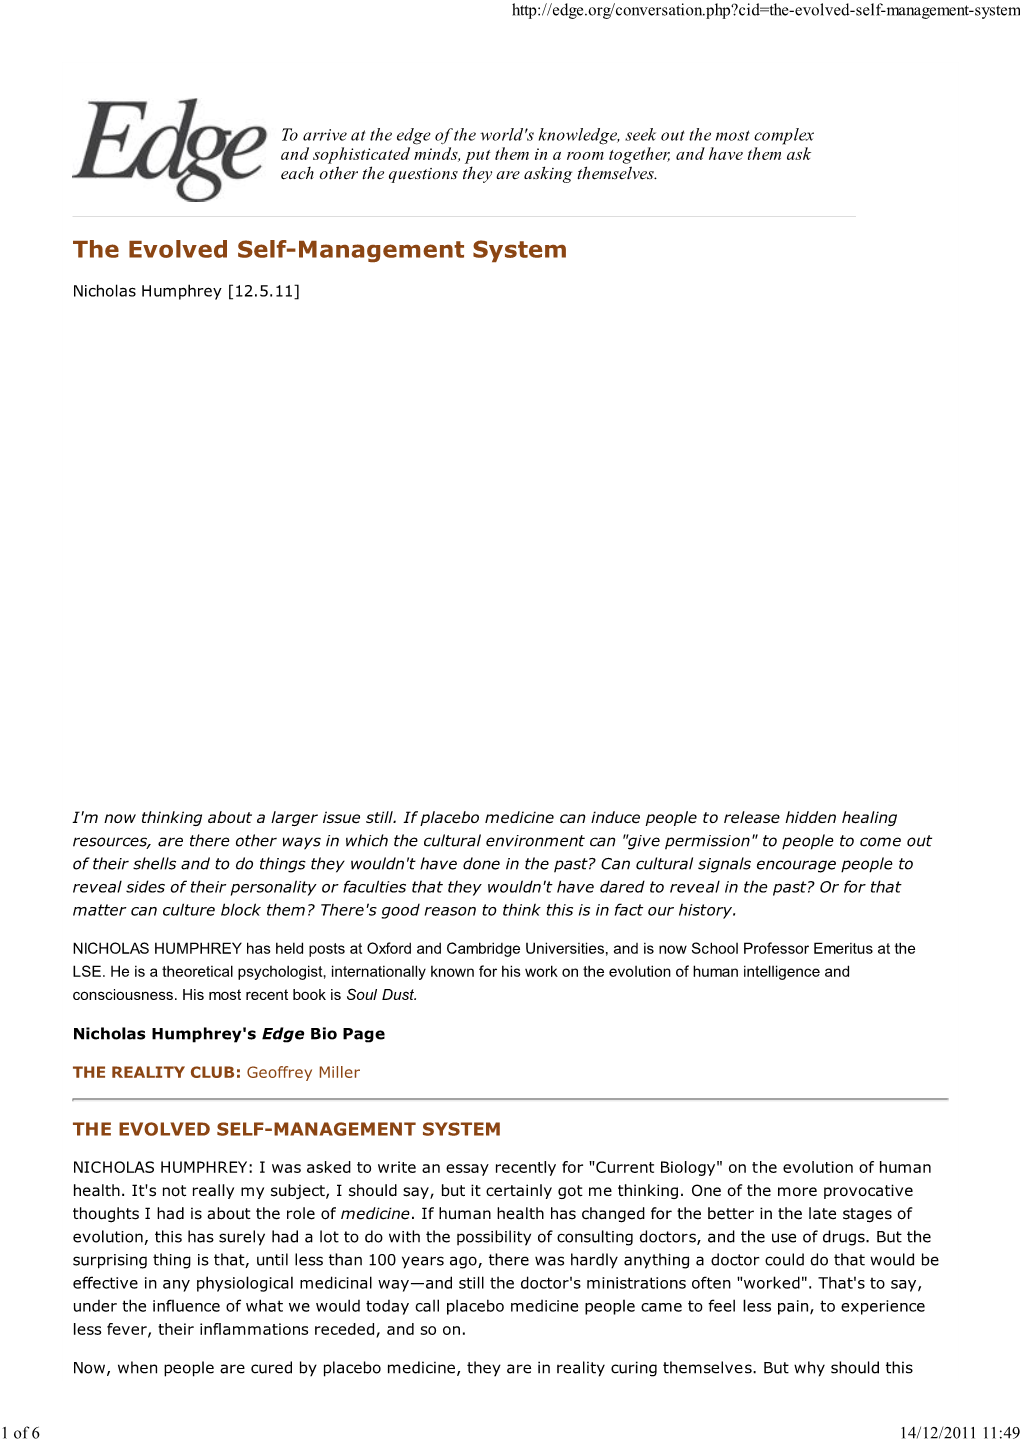 The Evolved Self-Management System